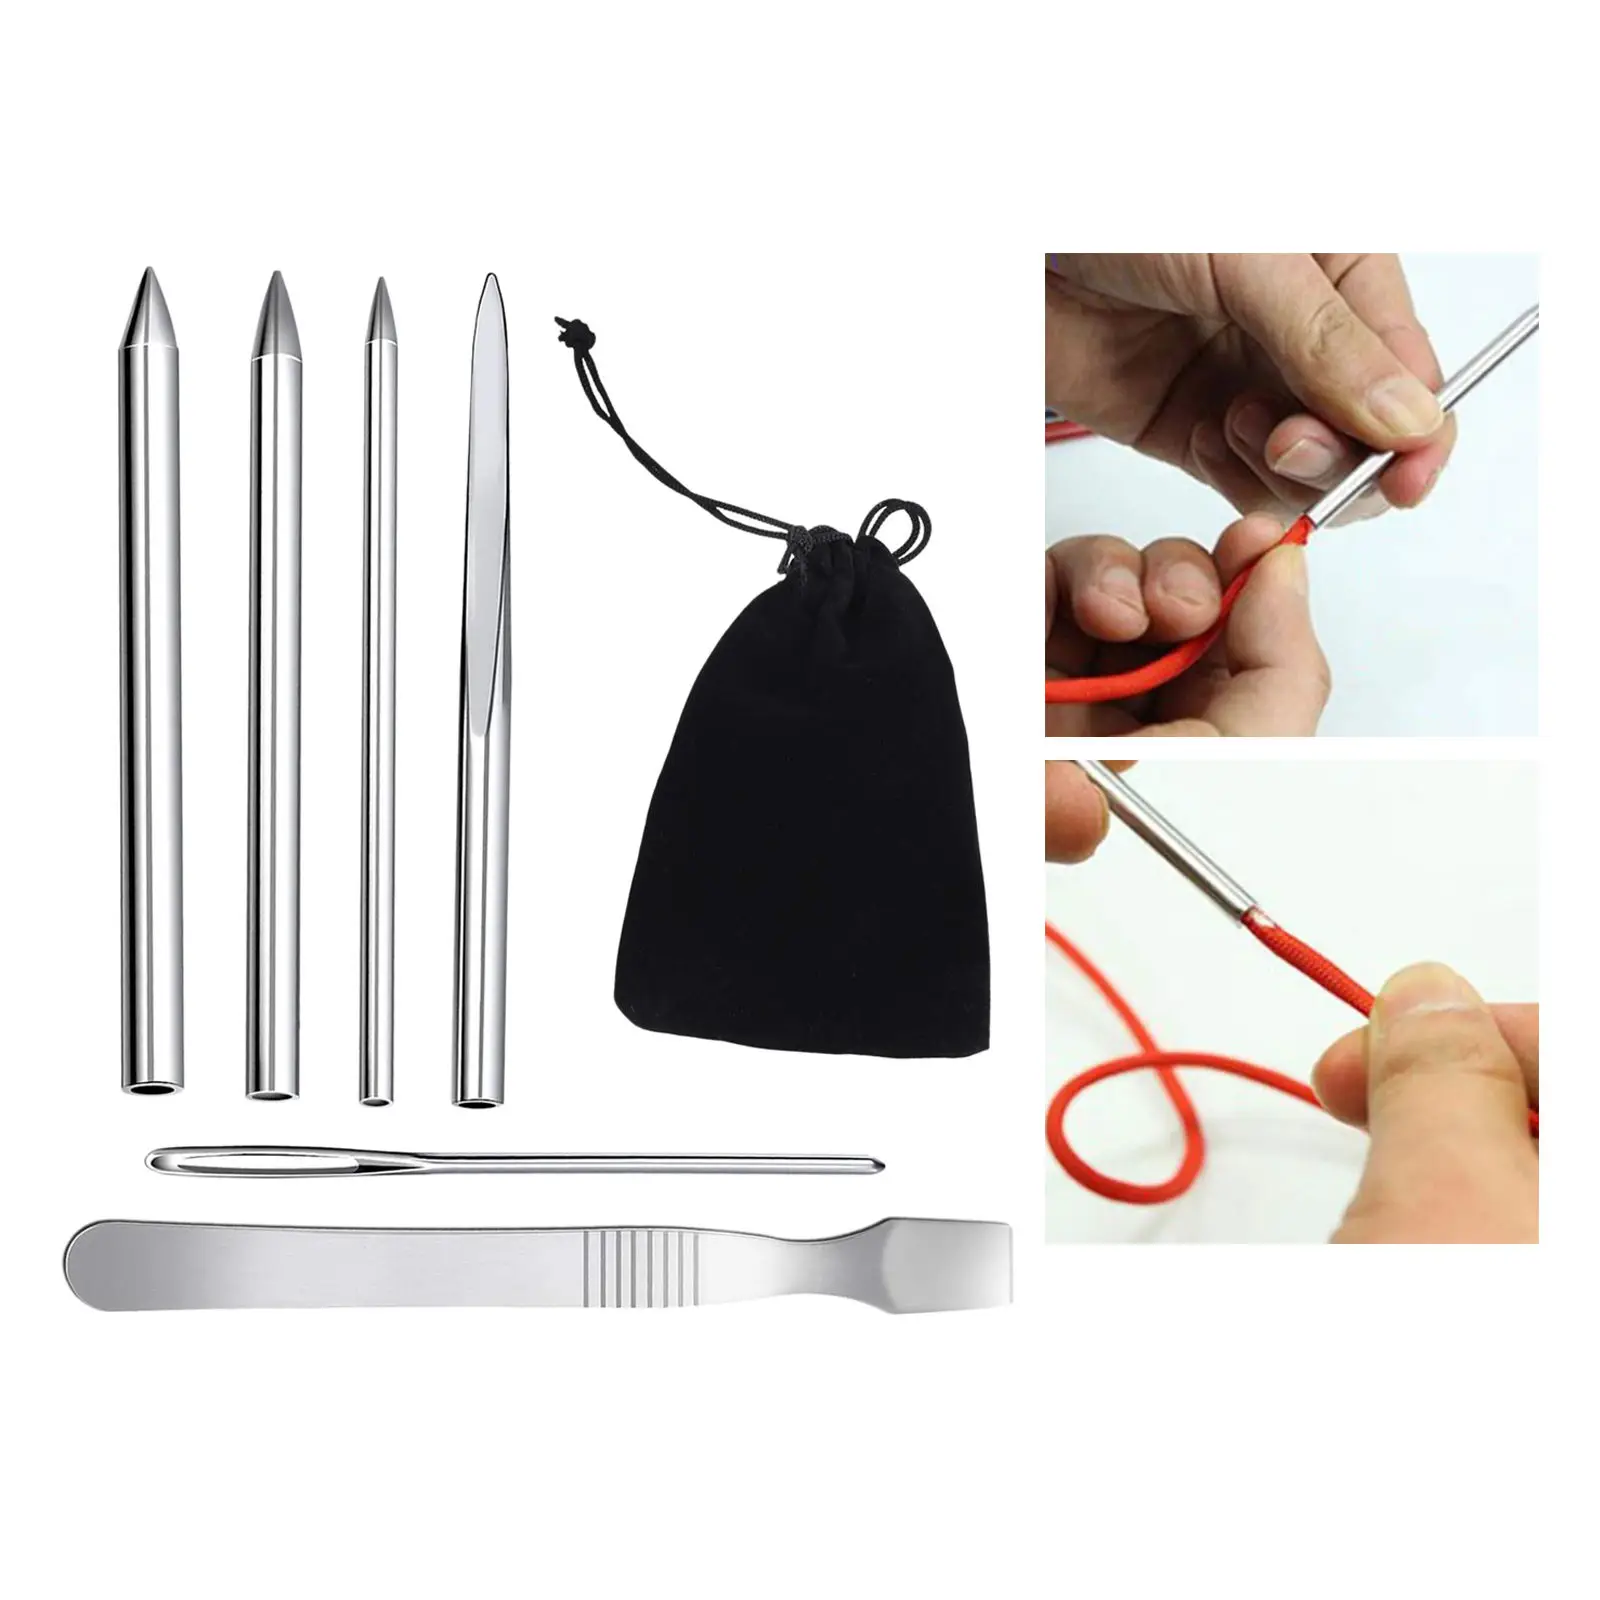 Paracord FID Set Lacing Flattener Needles with Velvet Bag for DIY Laces Strings Weaving Paracord Bracelet Leather Tool Kit